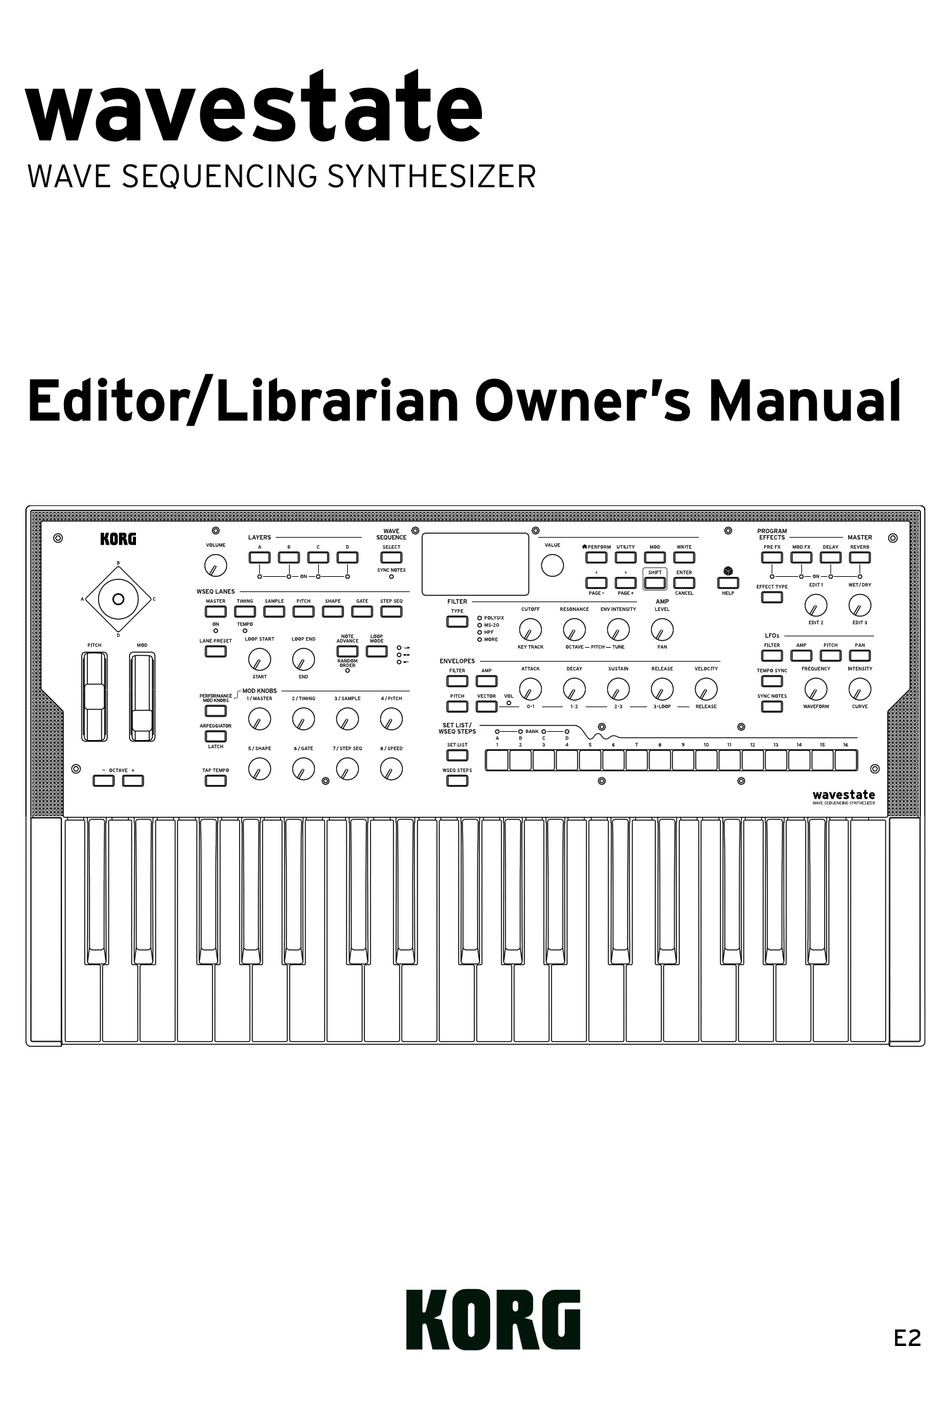 touchosc editor manual